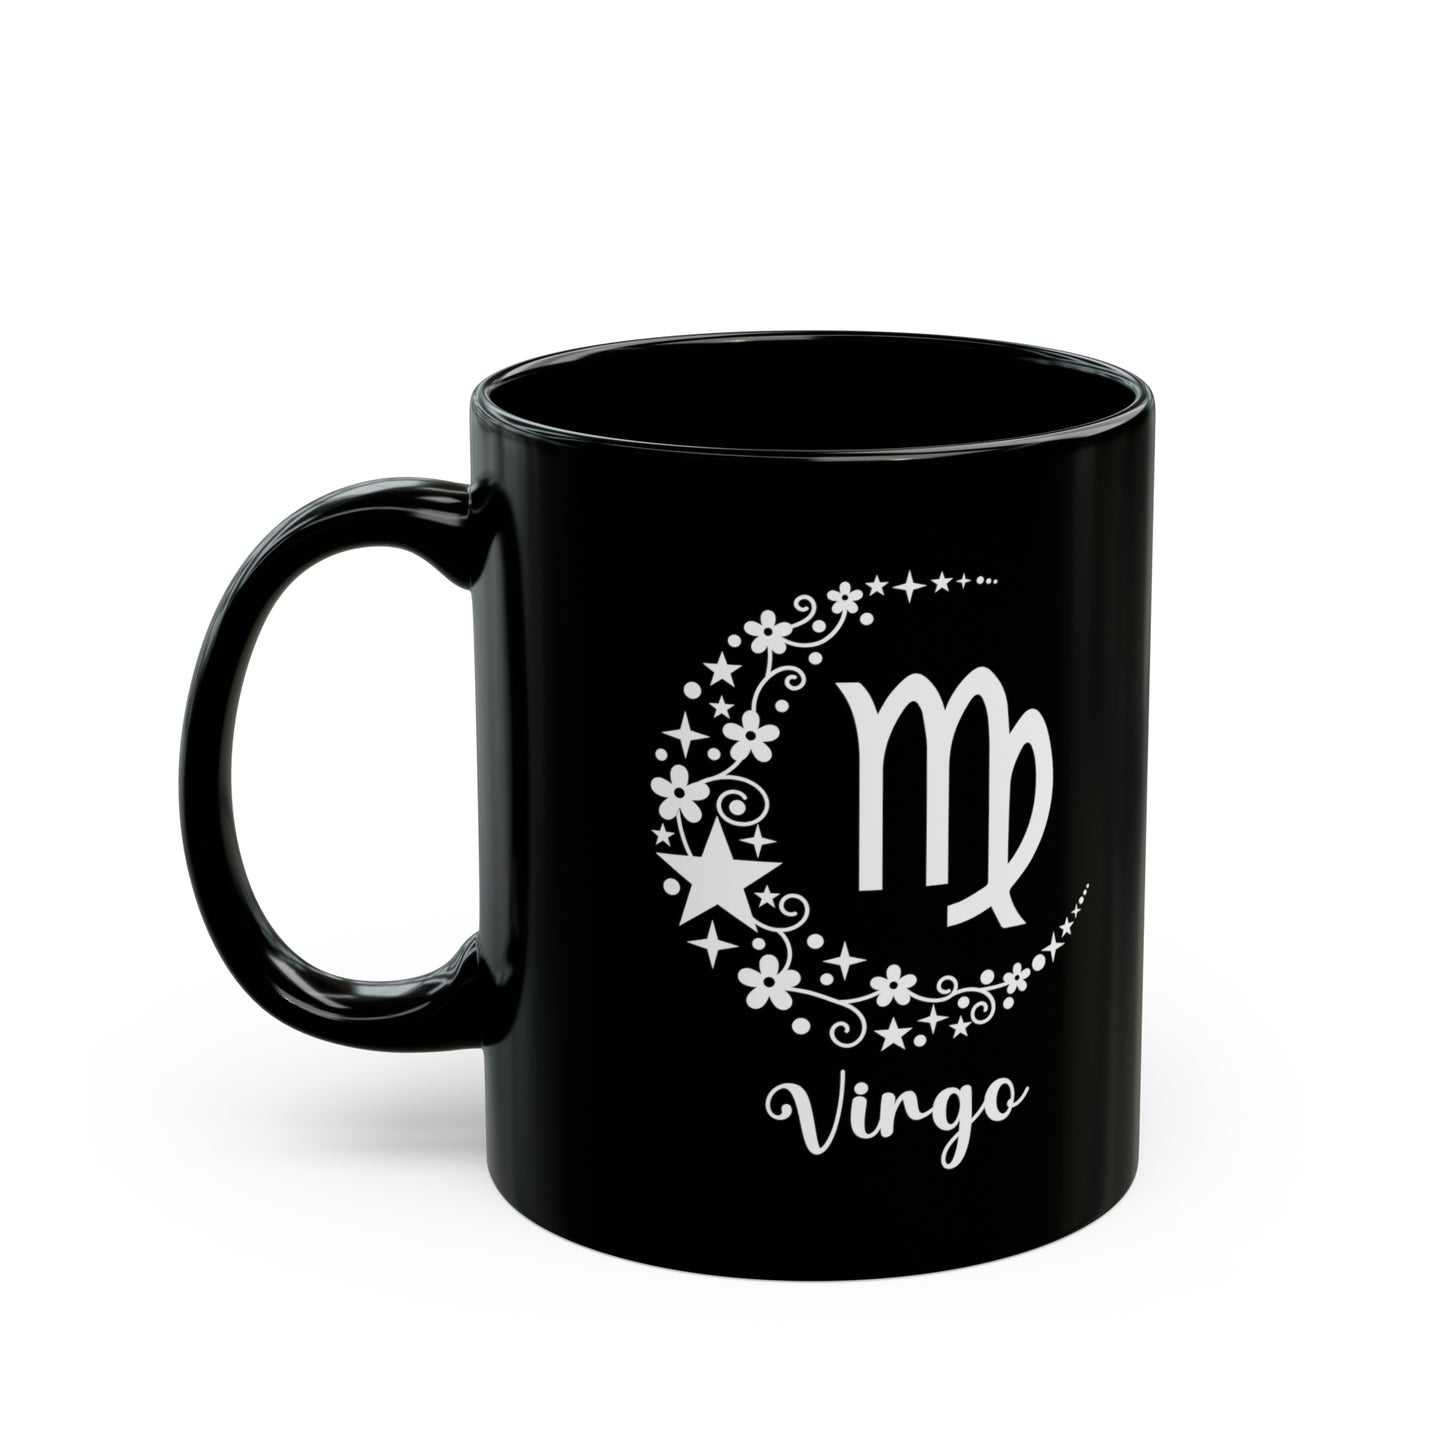 Virgo crescent moon mug